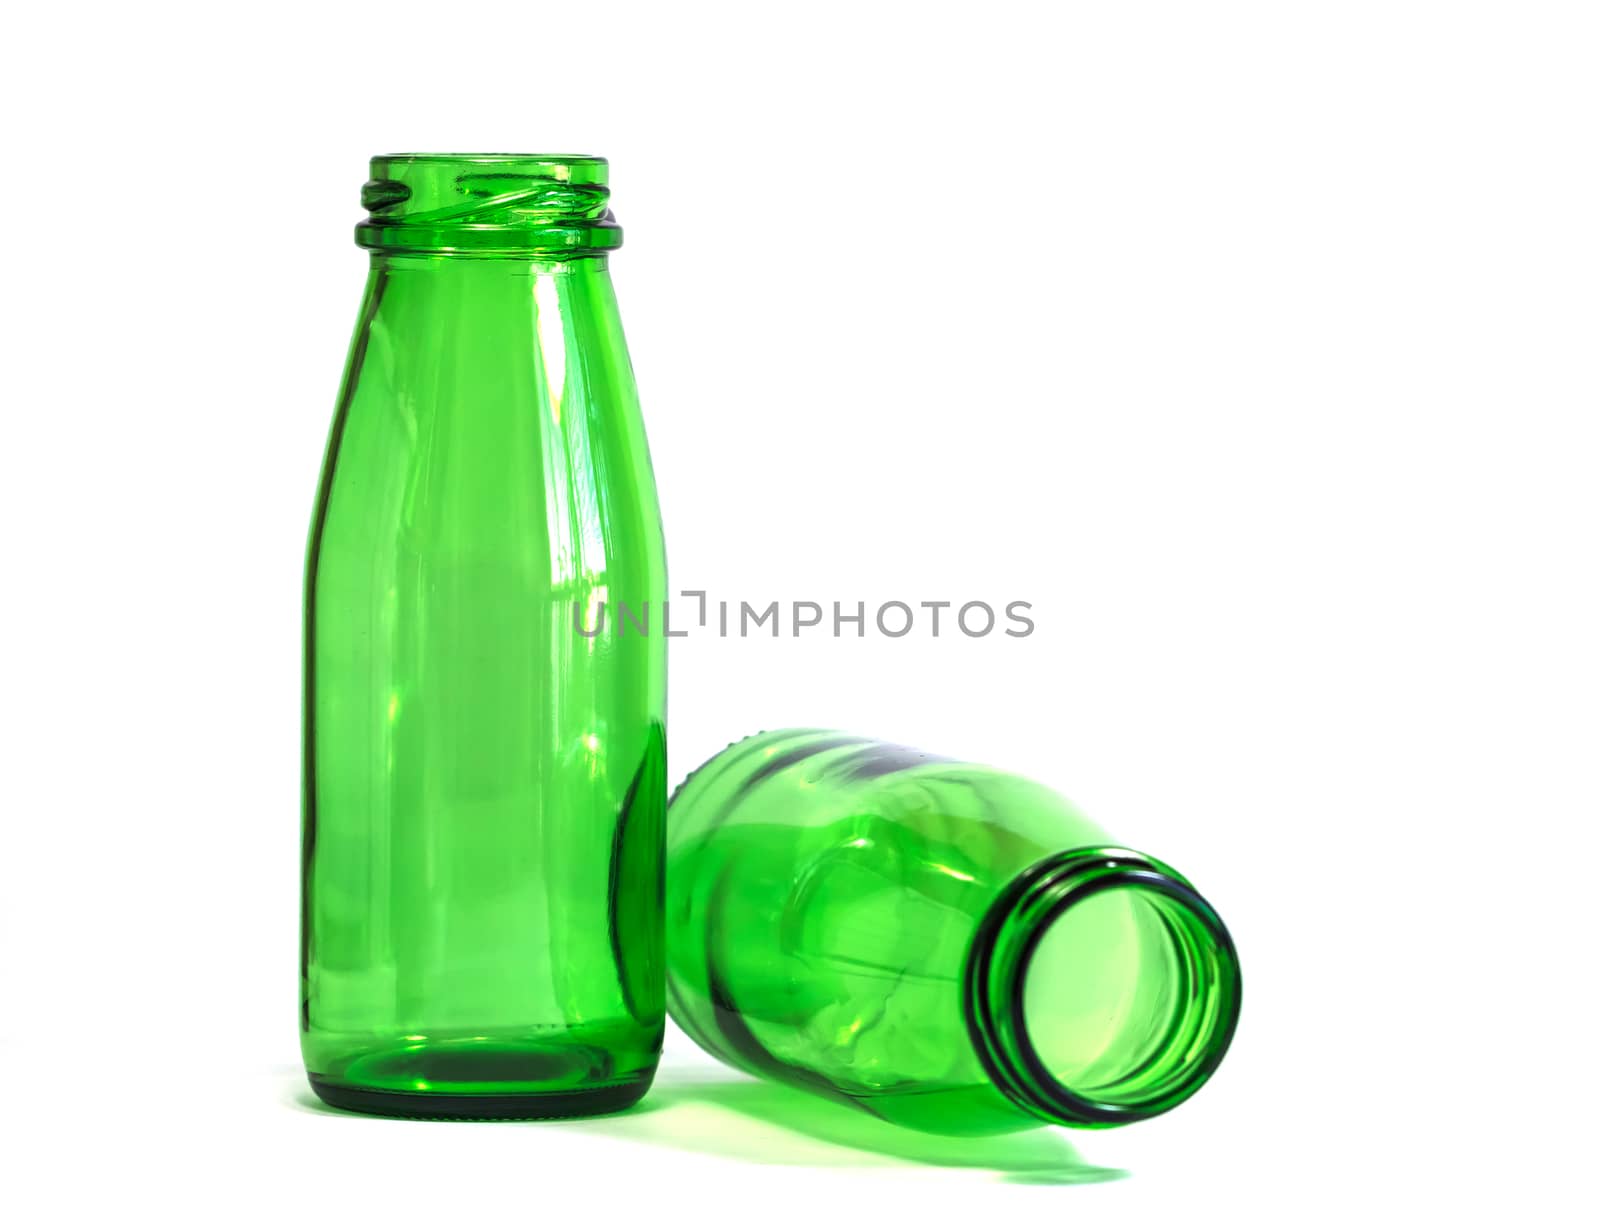 Green Bottles on White Background, with focus on Left bottle by punpleng